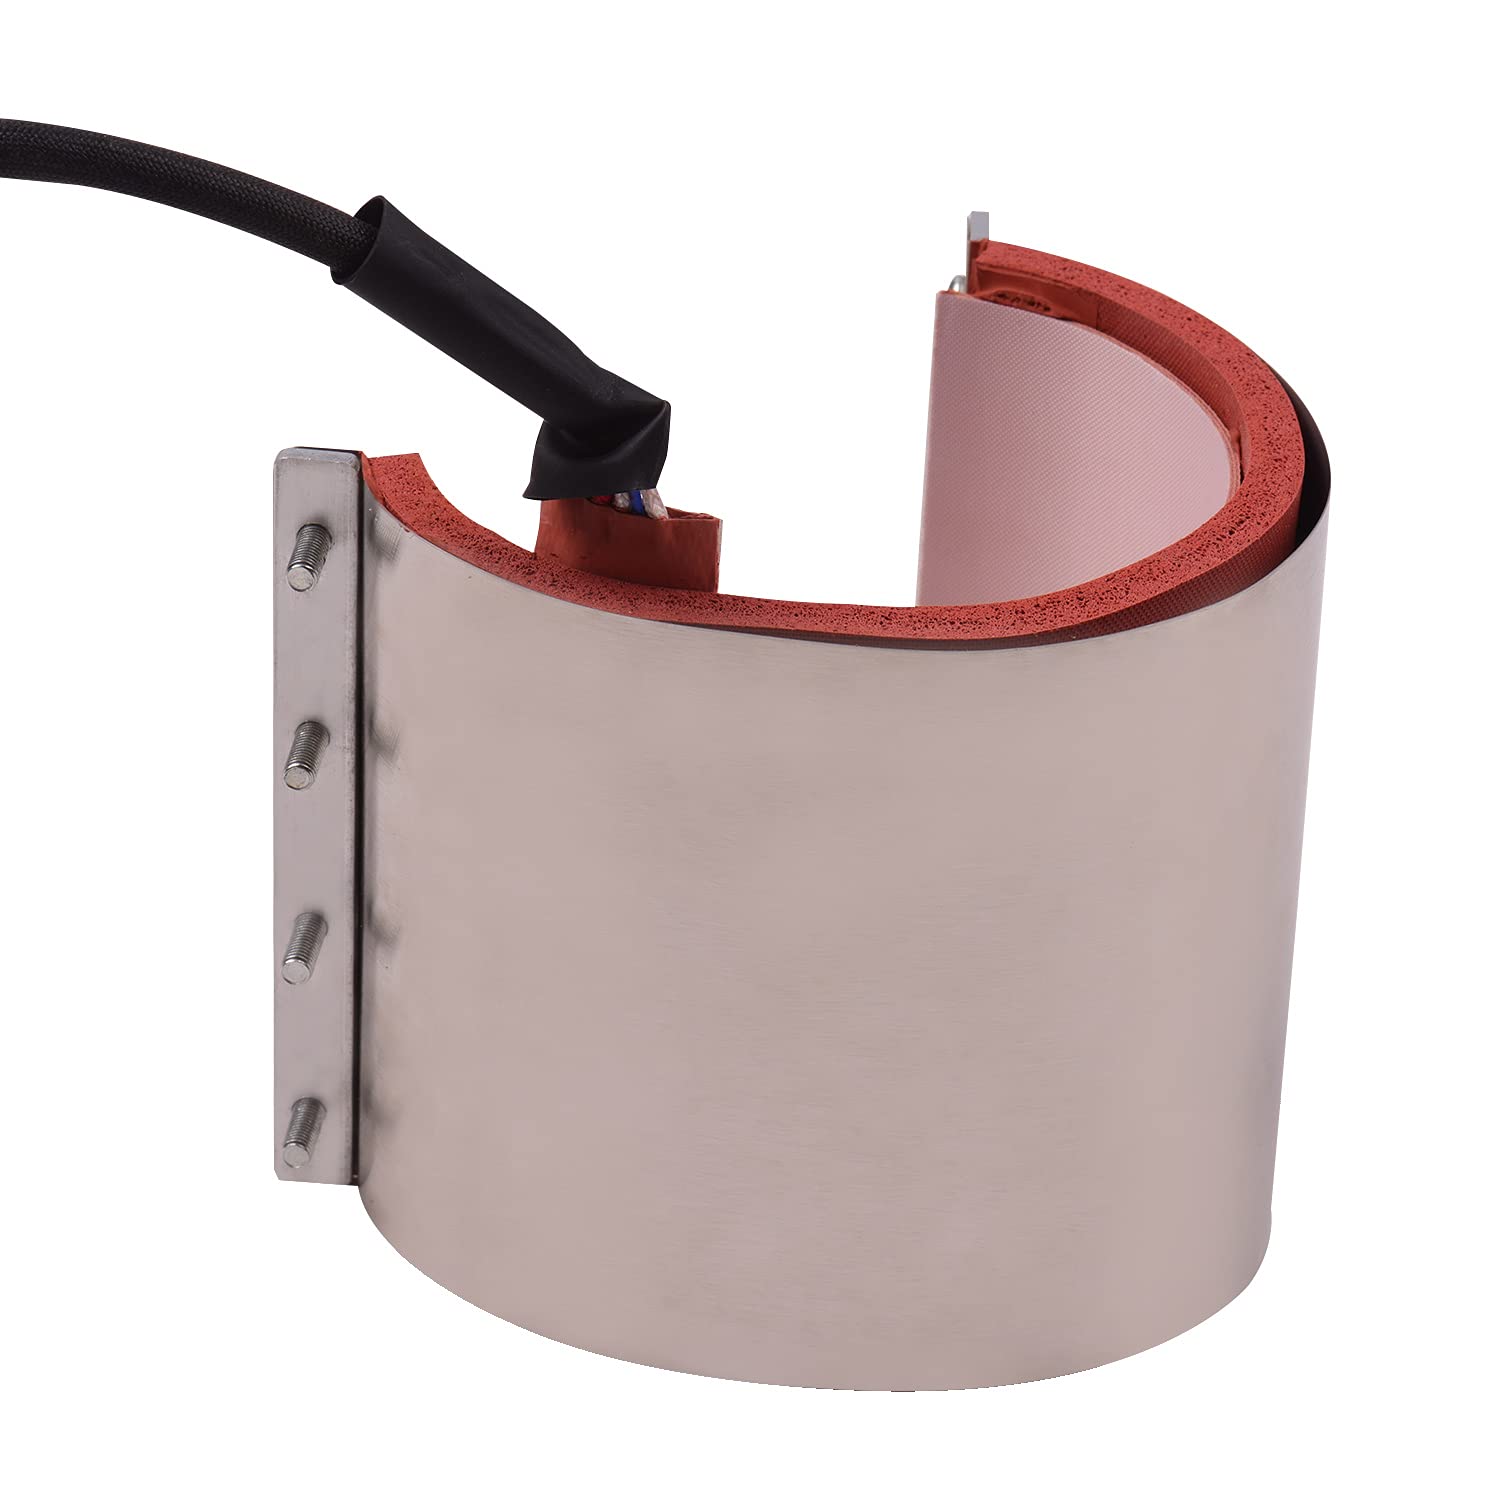 Entweg Mug Press Mug Cup Press Heating Transfer Attachment Silica Gel 11oz(1223.5cm) 110V for Heat Press Machine Transfer Sublimation